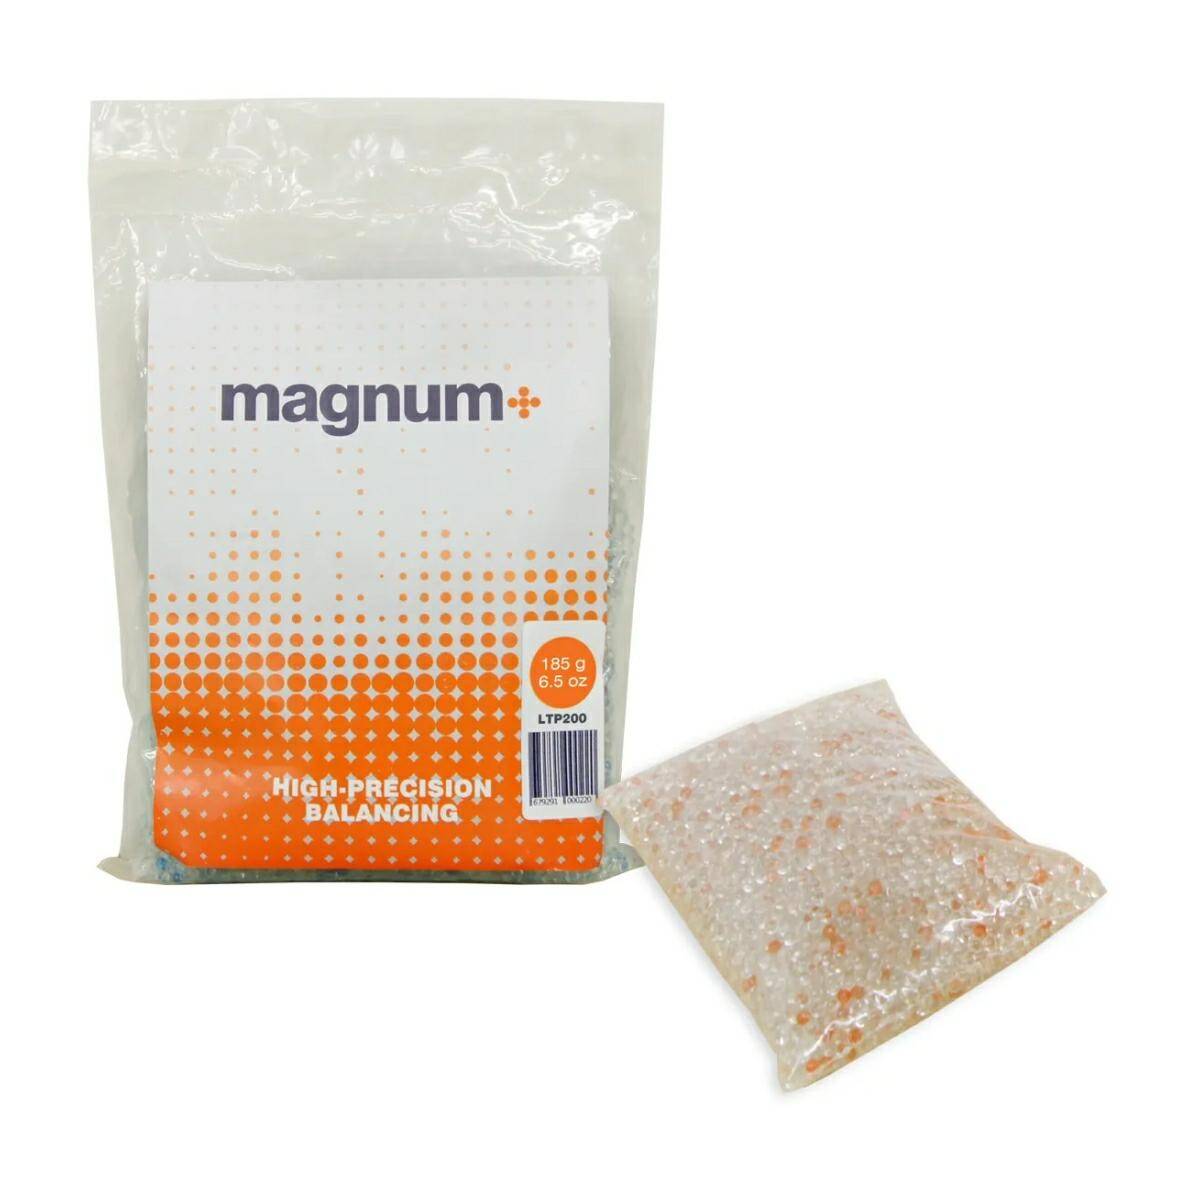 Magnum Plus Balance Powder 185 g (T-LTP200)